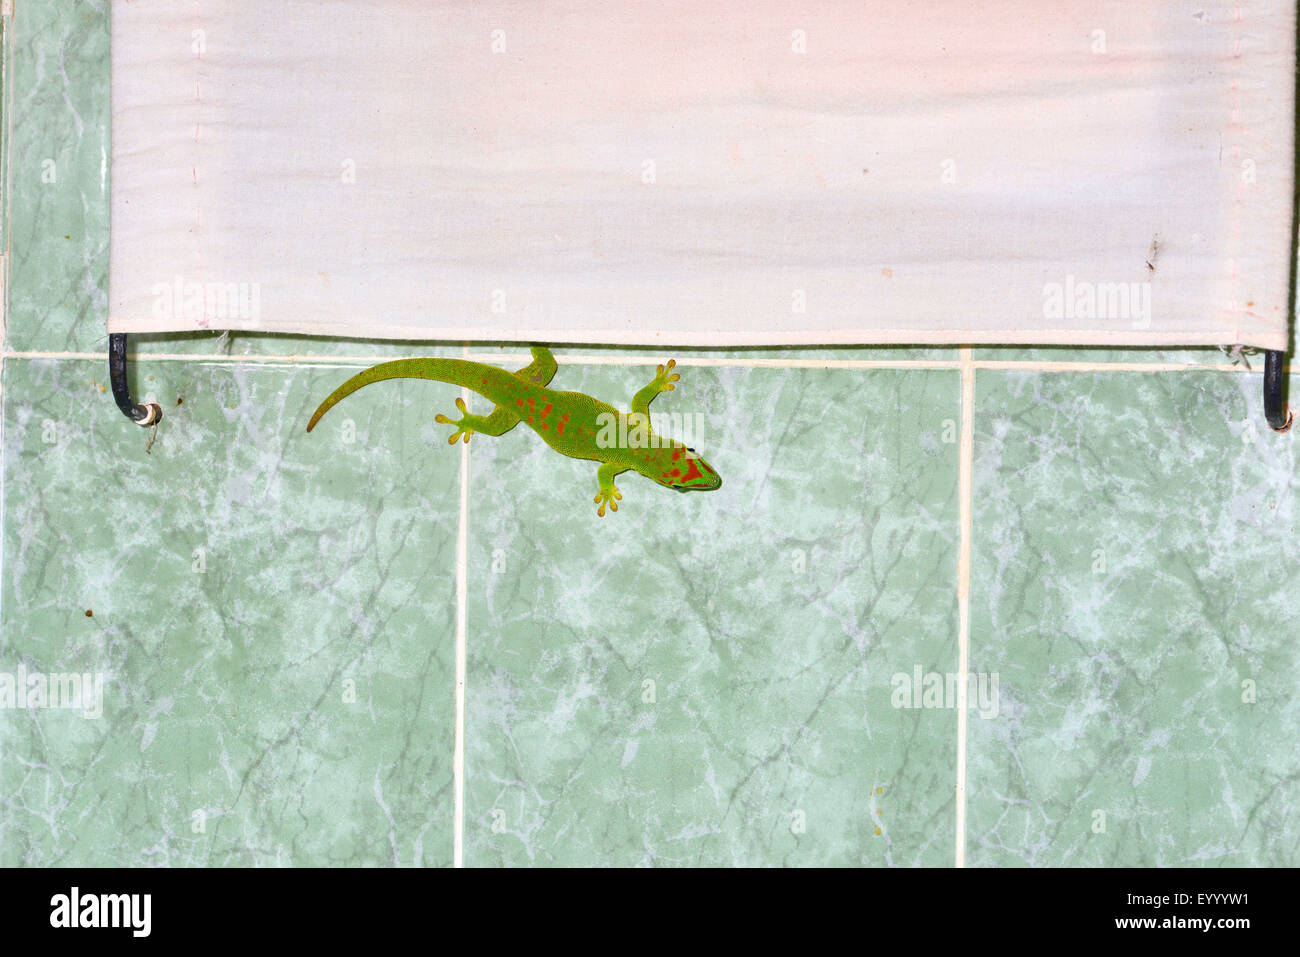 madagascar giant day gecko (Phelsuma madagascariensis grandis, Phelsuma grandis), sits on the tiles in a bathroom, Madagascar, Cap Diego Stock Photo